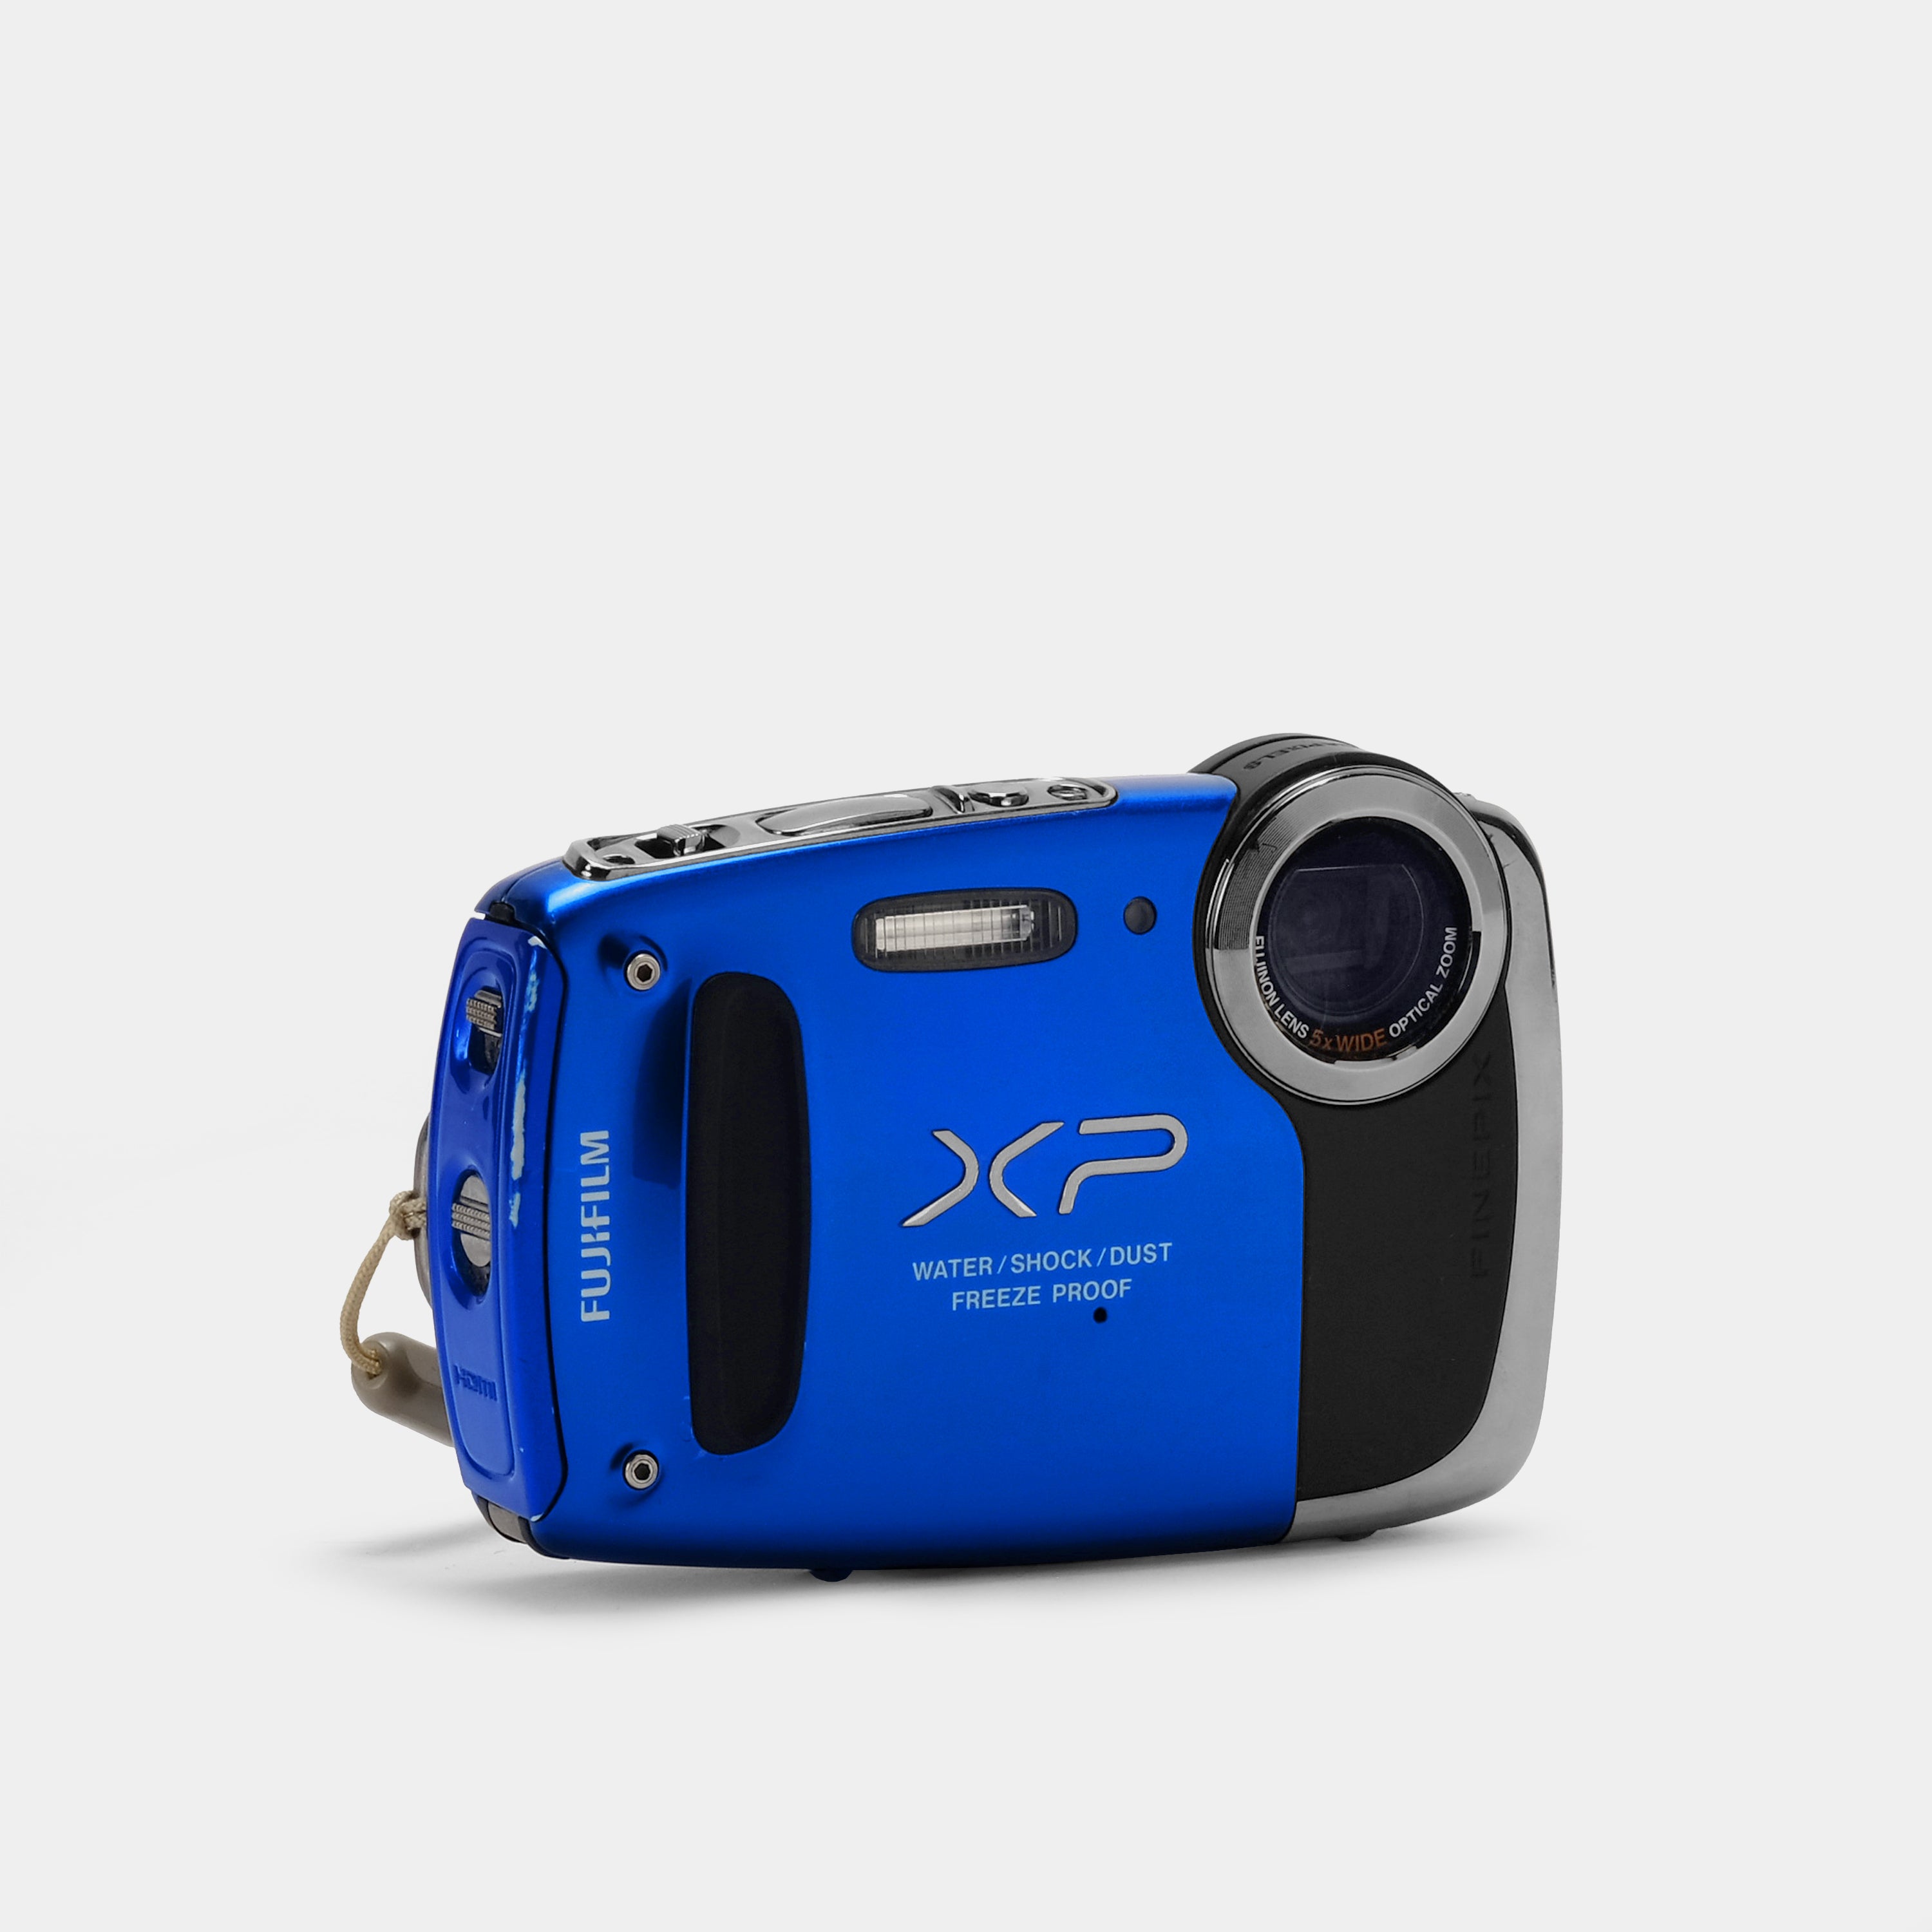 Fujifilm Finepix XP50 Blue Point and Shoot Digital Camera